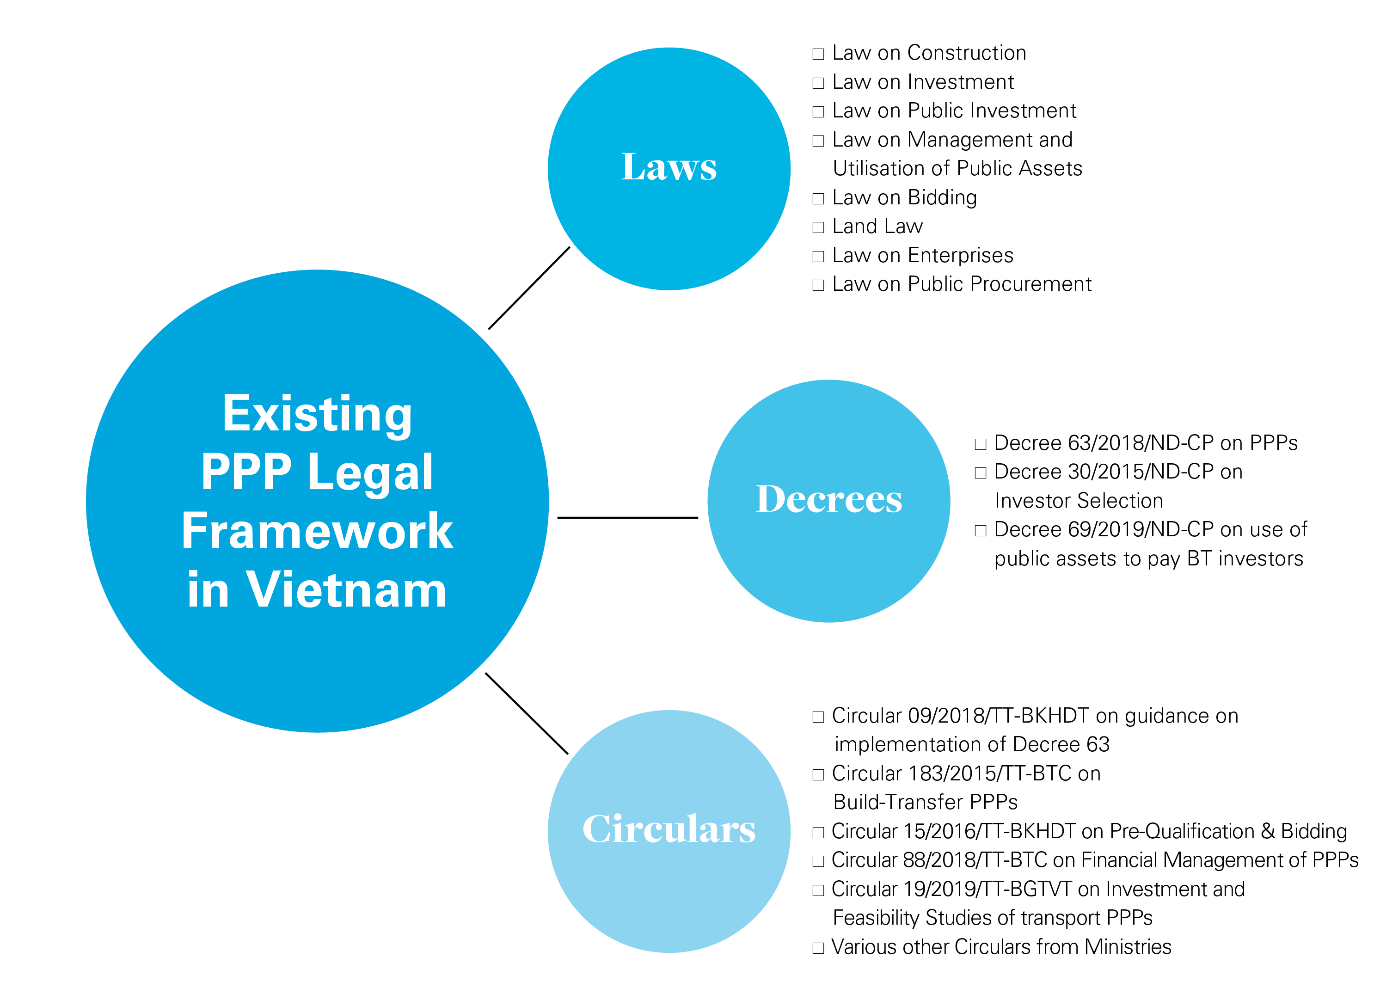 Existing PPP Legal Framework in Vietnam (chart)